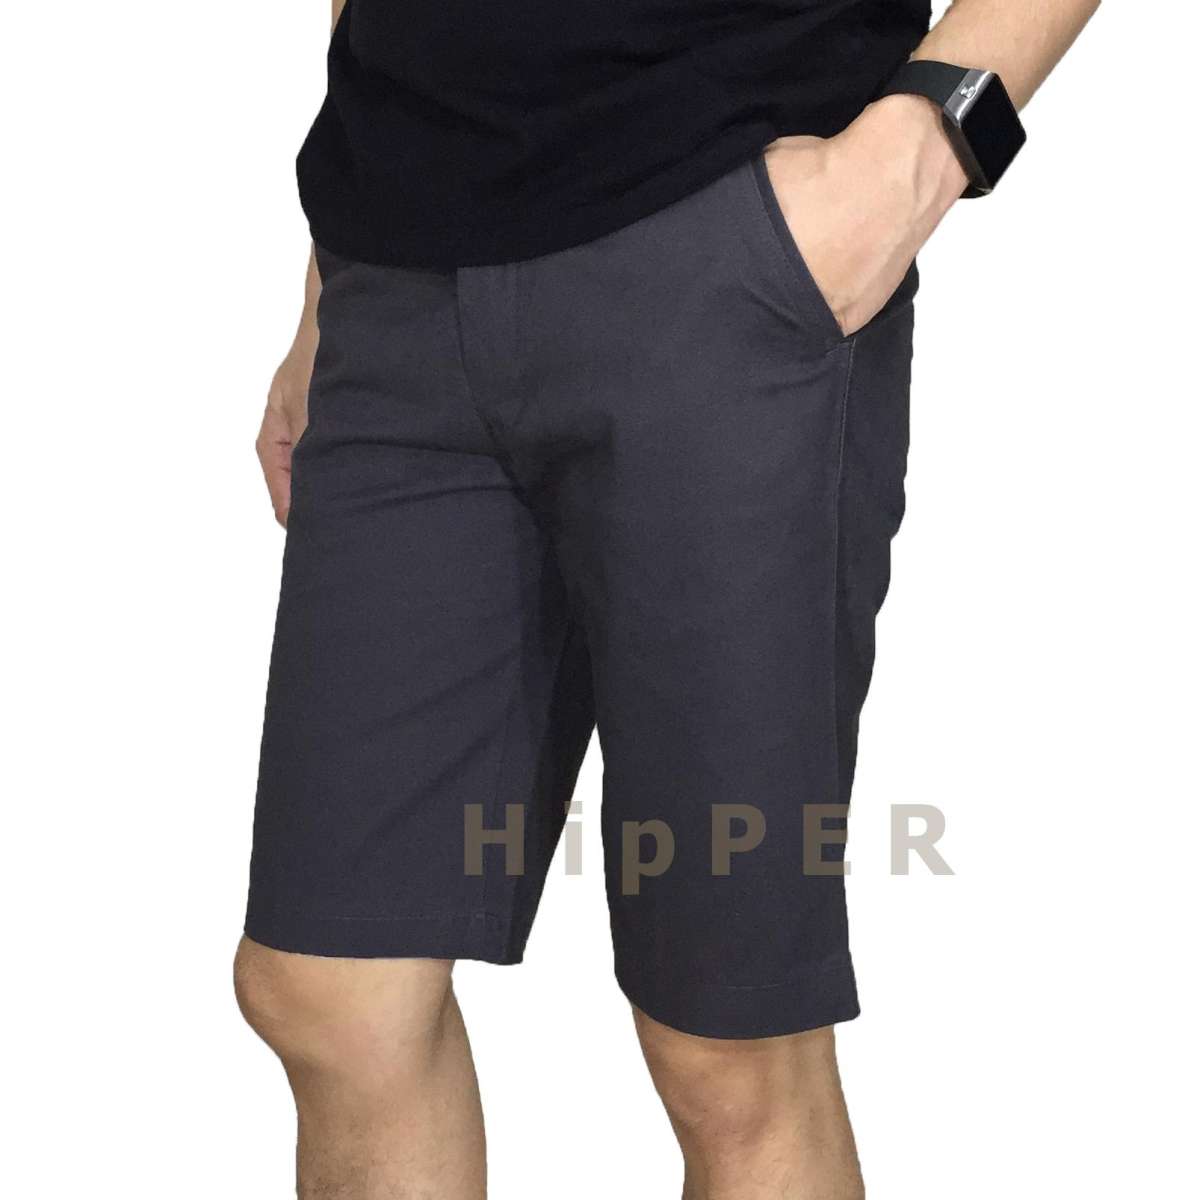 6.HipPER กางเกงขาสั้นชาย ผ้าเวสป้อย Premium (สีเทา) P181